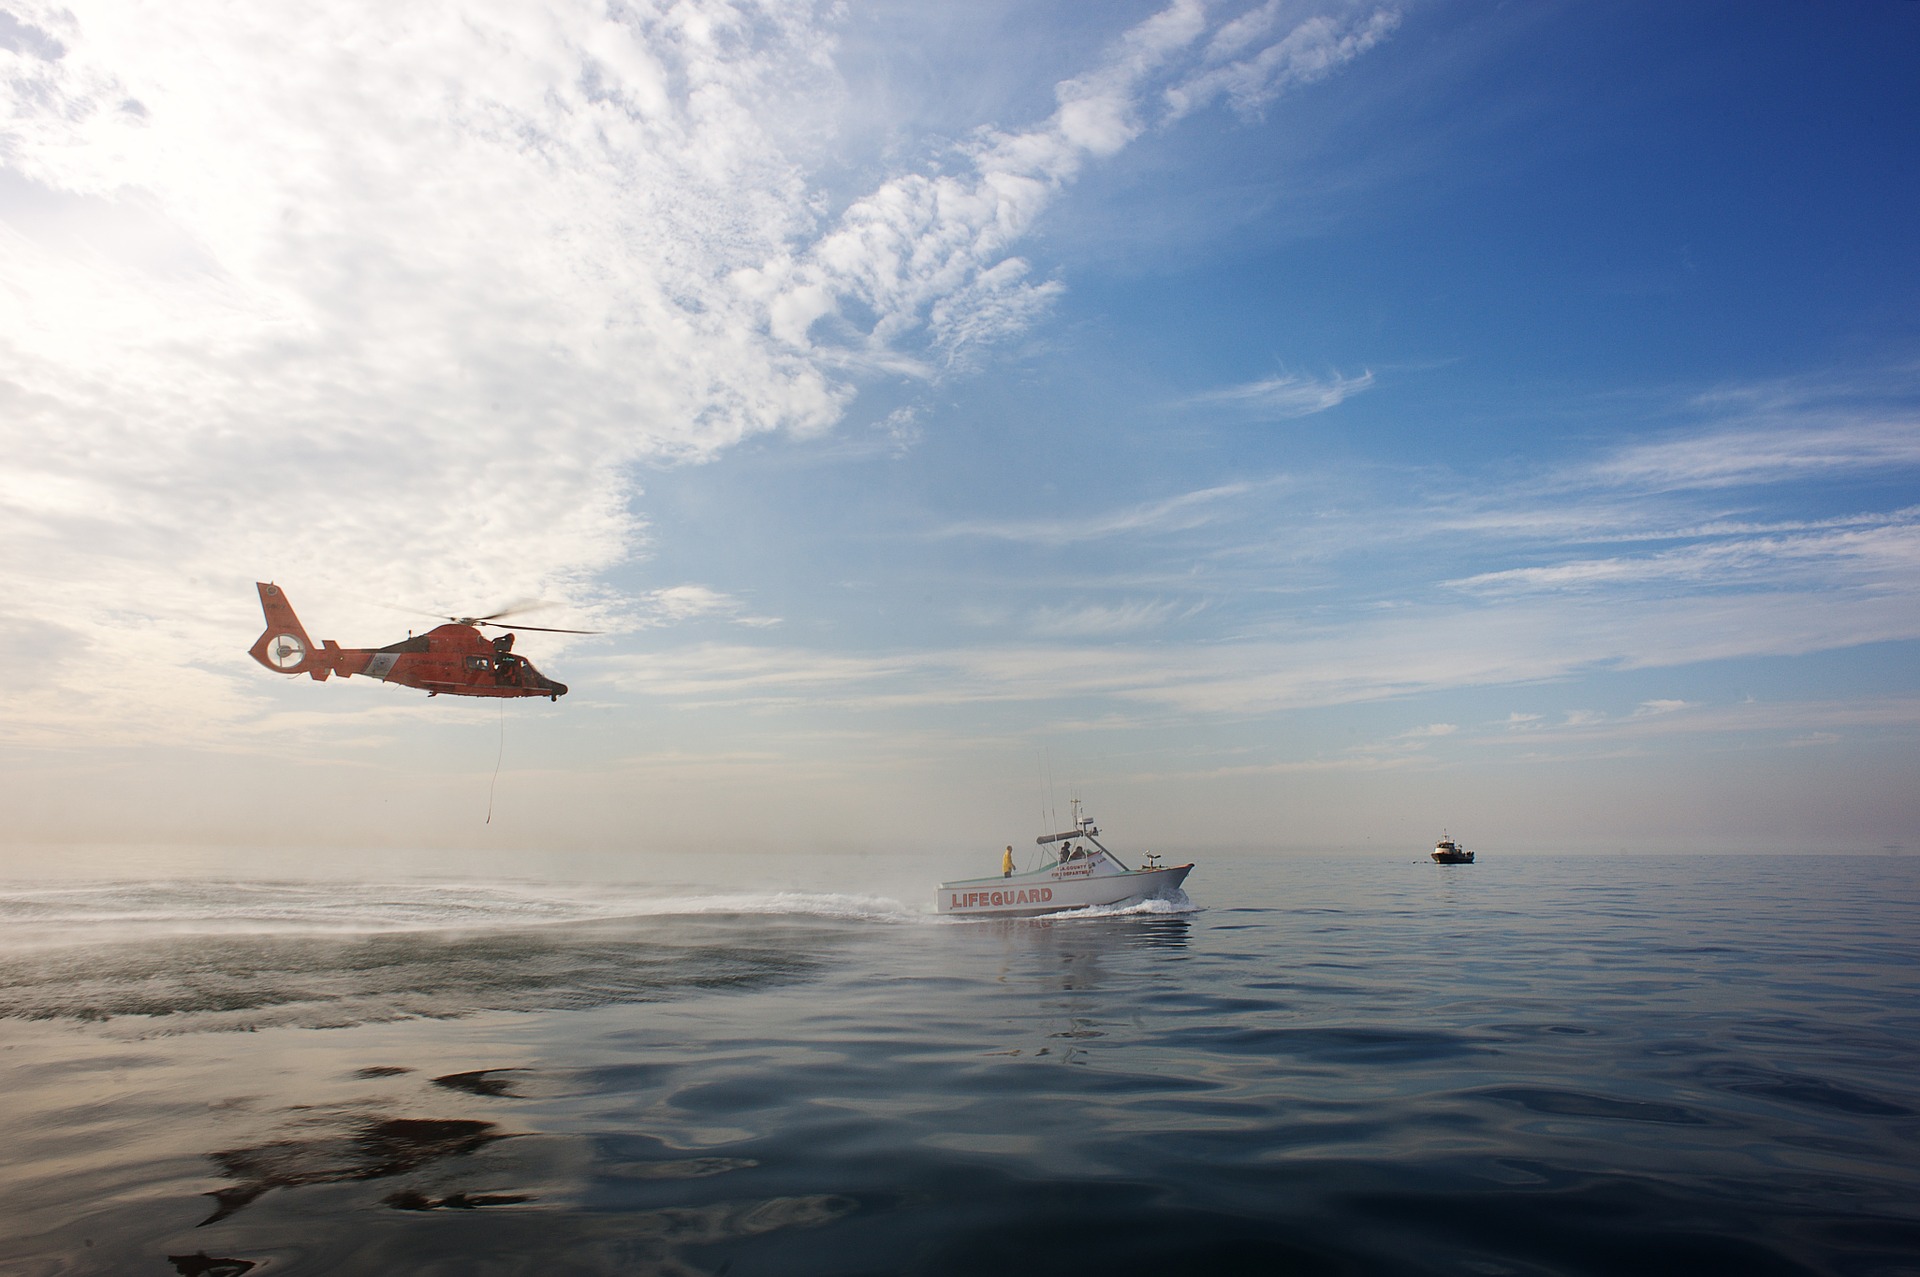 VHF marine radios water rescue